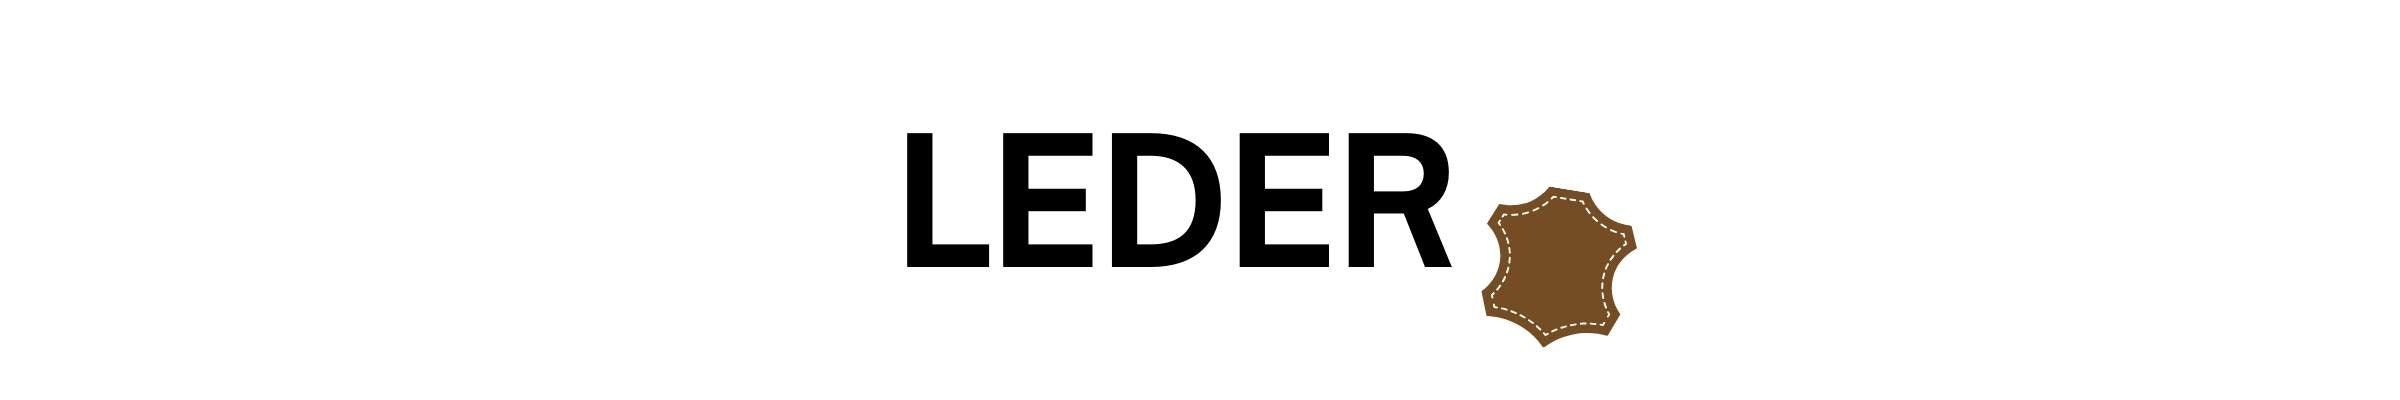 Leder Collection - WOOFED.